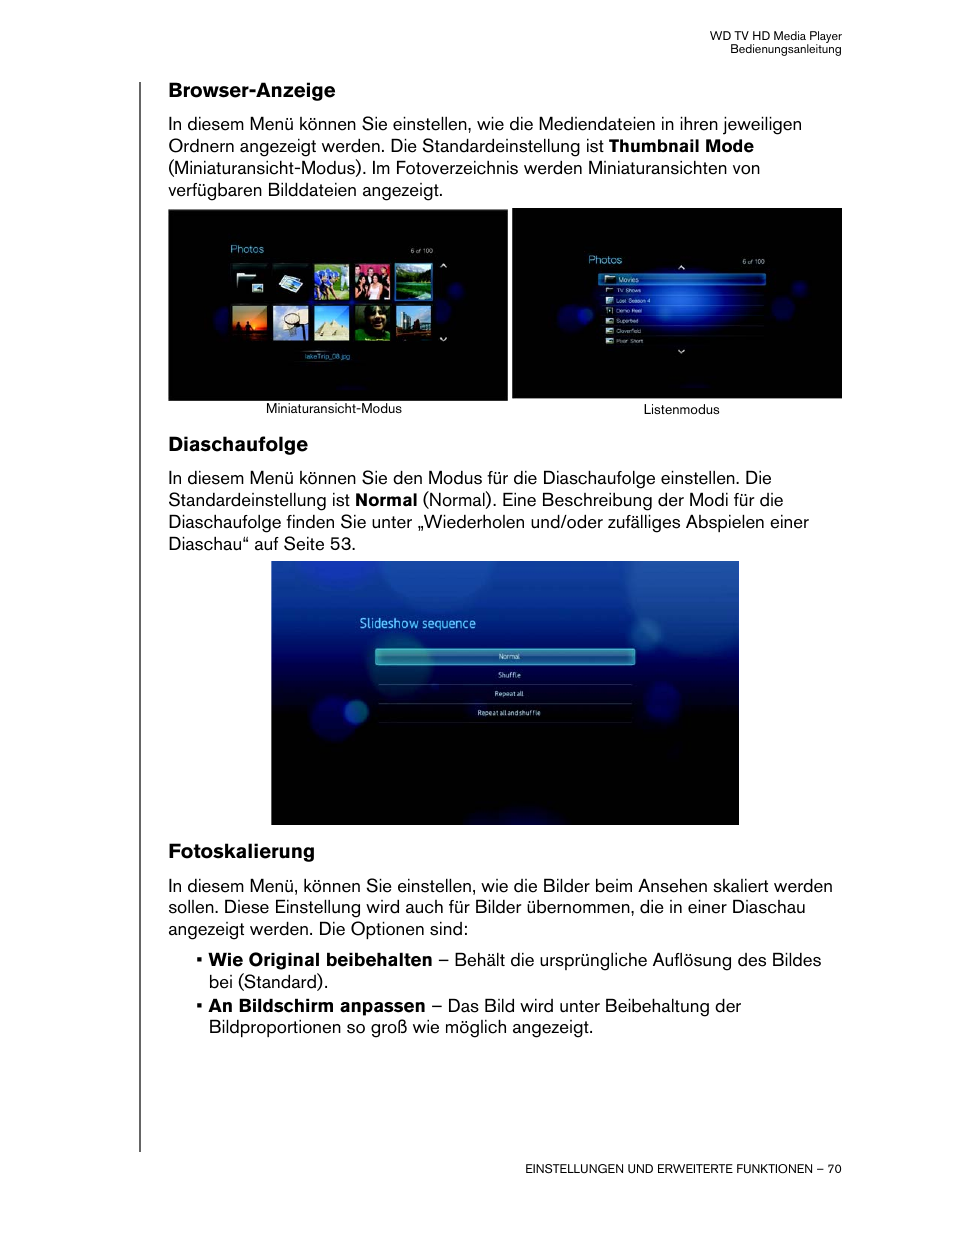 Browser-anzeige, Diaschaufolge, Fotoskalierung | Western Digital WD TV HD Media Player (Gen 2) User Manual Benutzerhandbuch | Seite 73 / 104